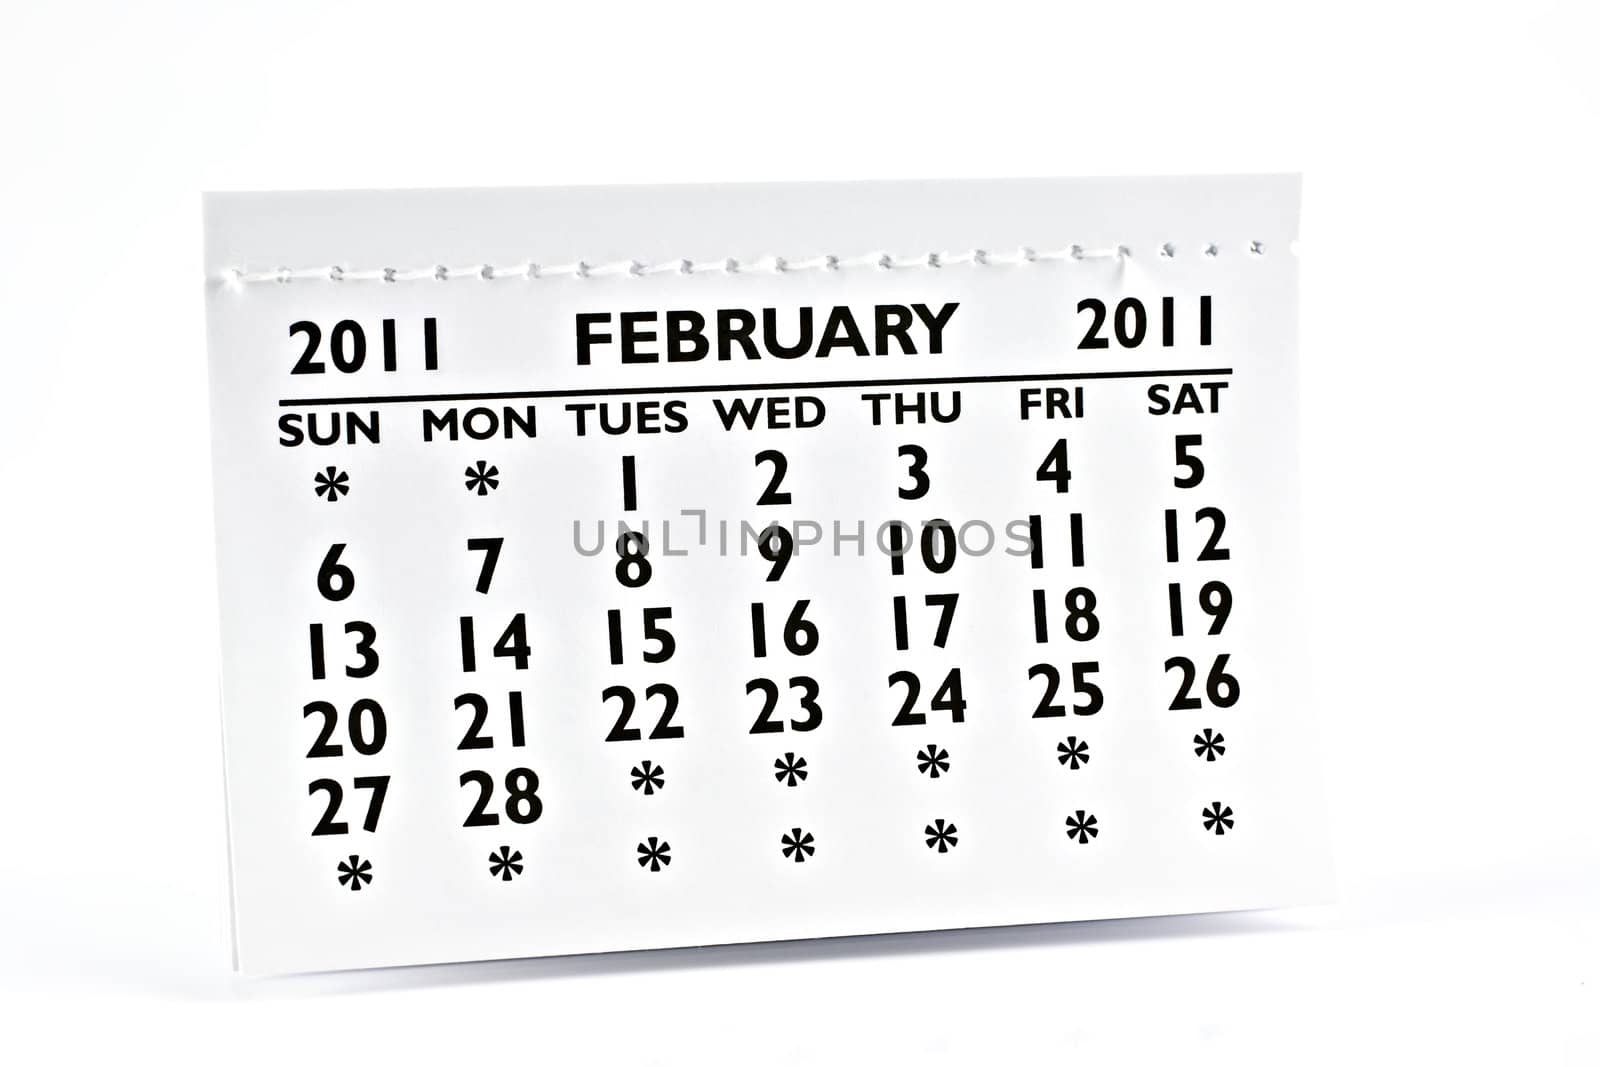 February 2011 - Calendar. by gitusik